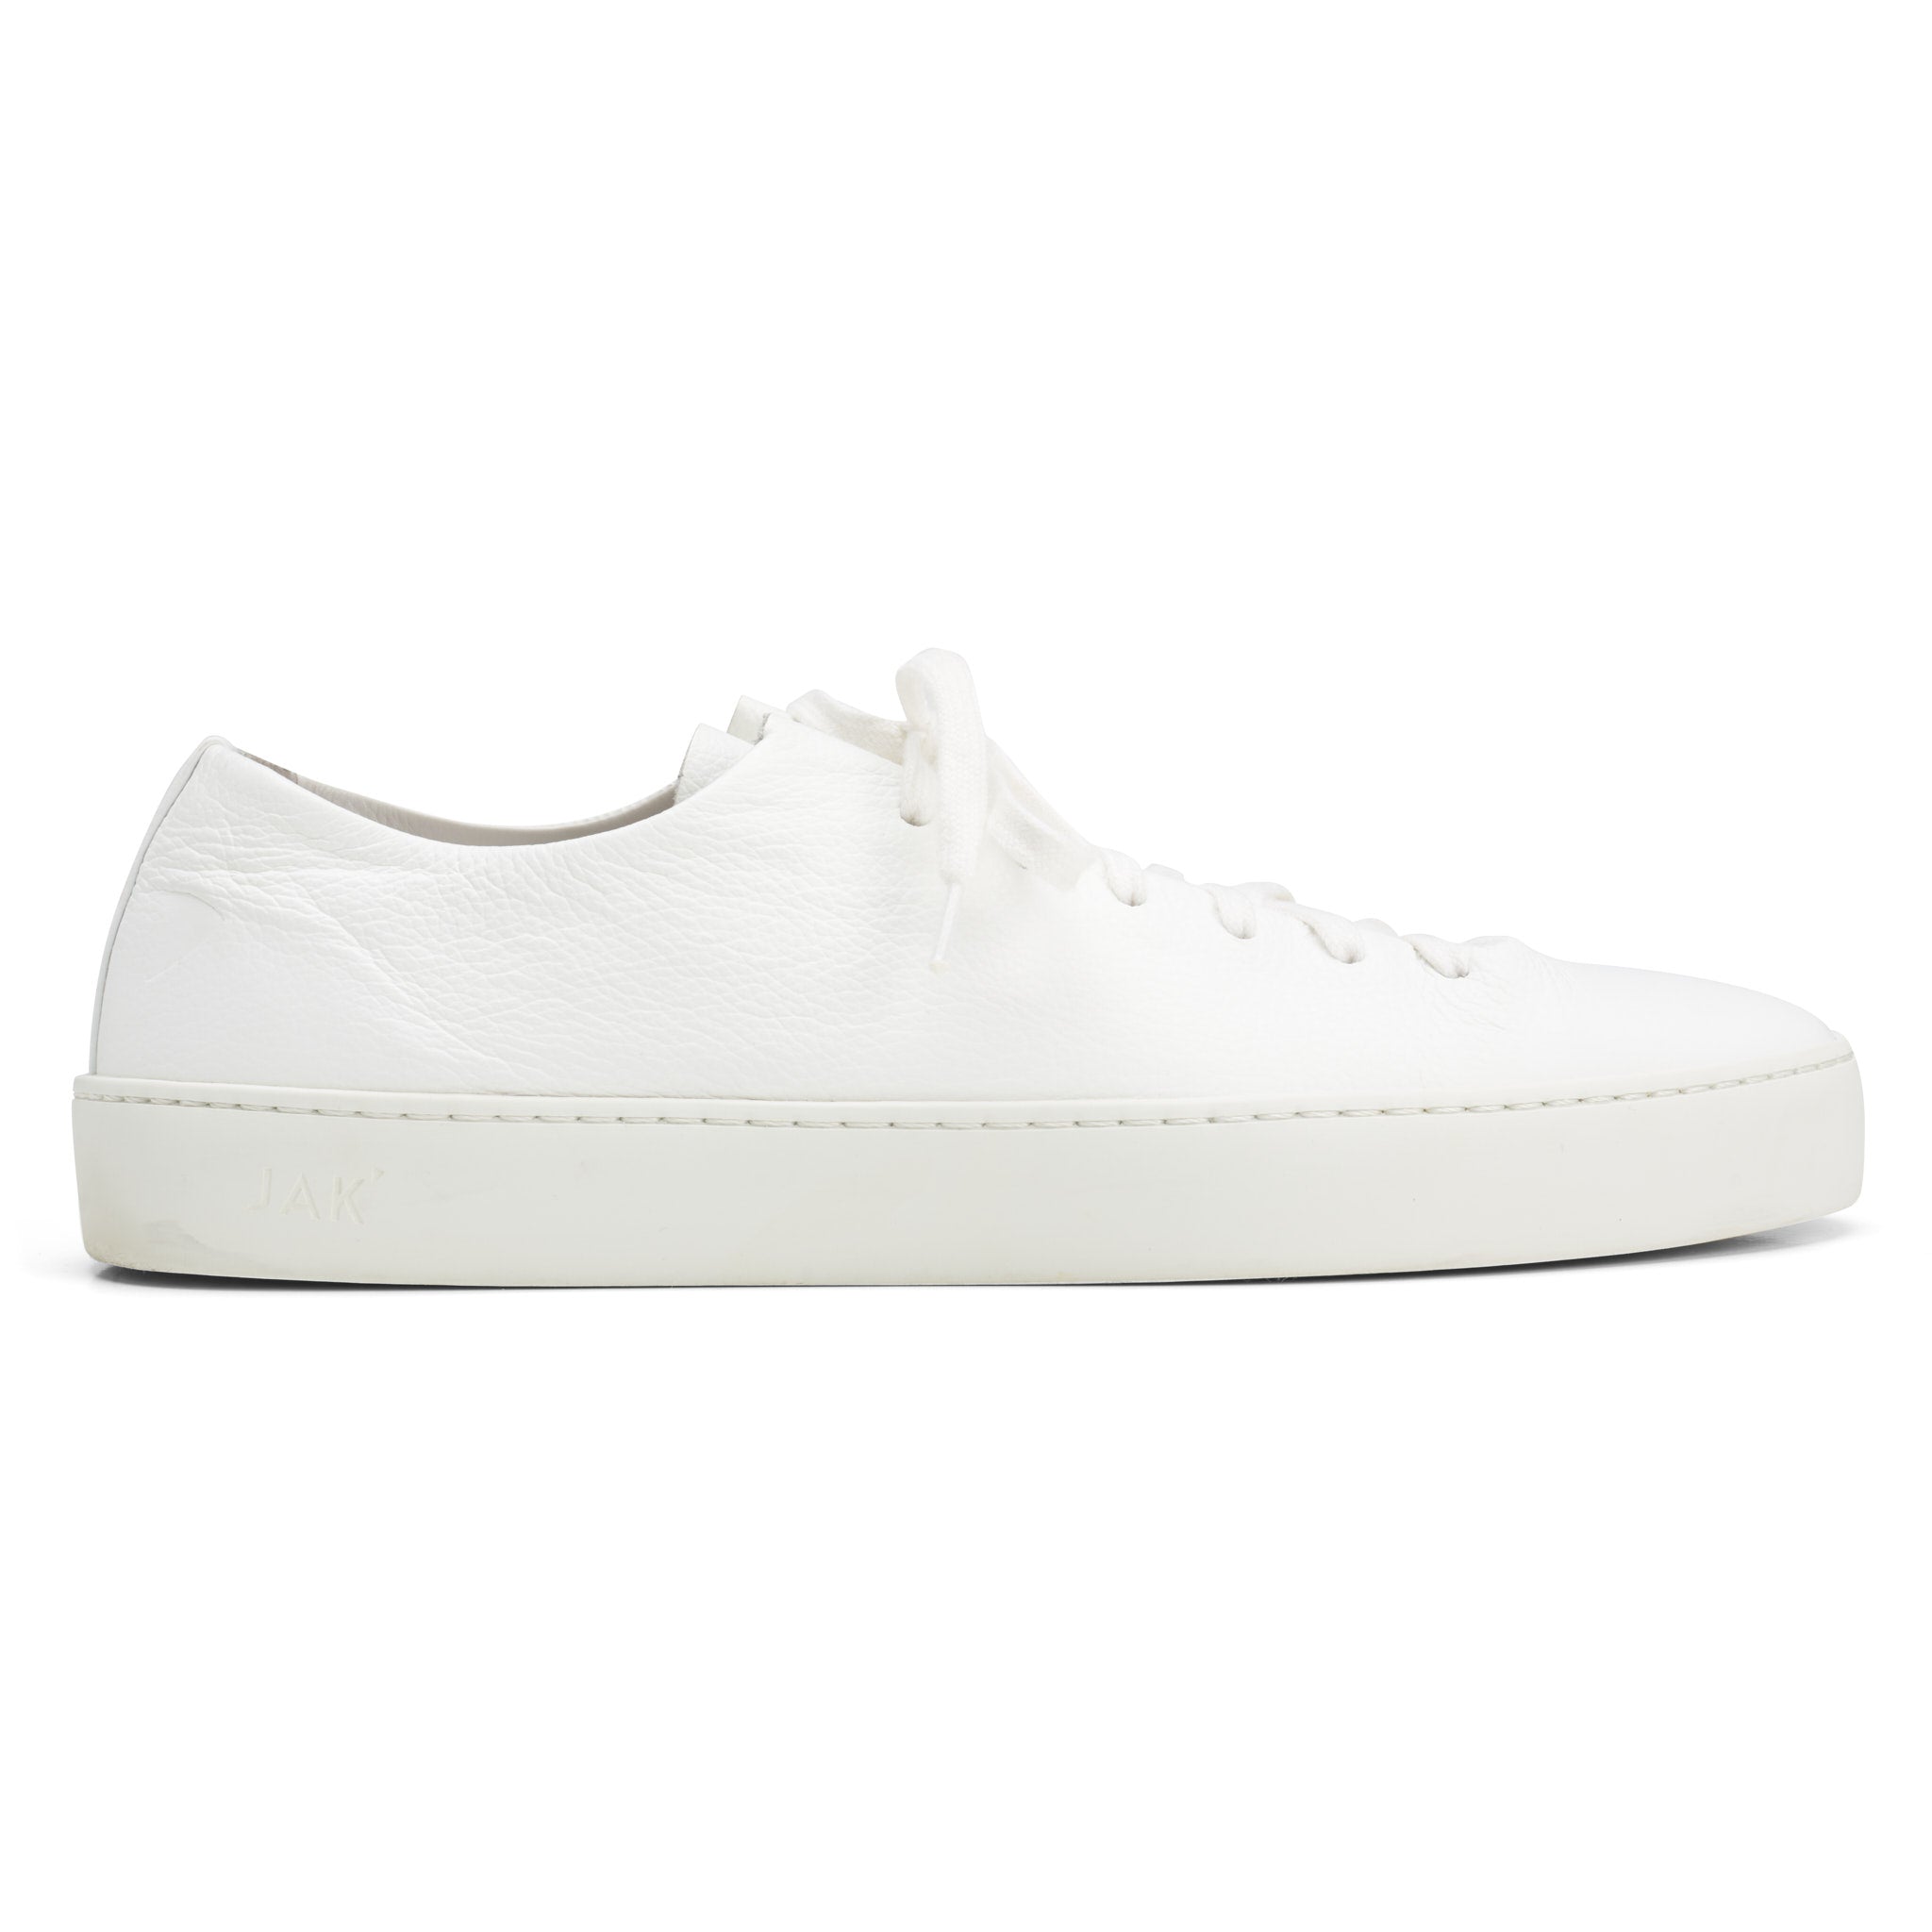 JAK "Atom" All White Full Grain Calf Leather Low-Top Sneaker Shoes EU 42 US 9 JAK